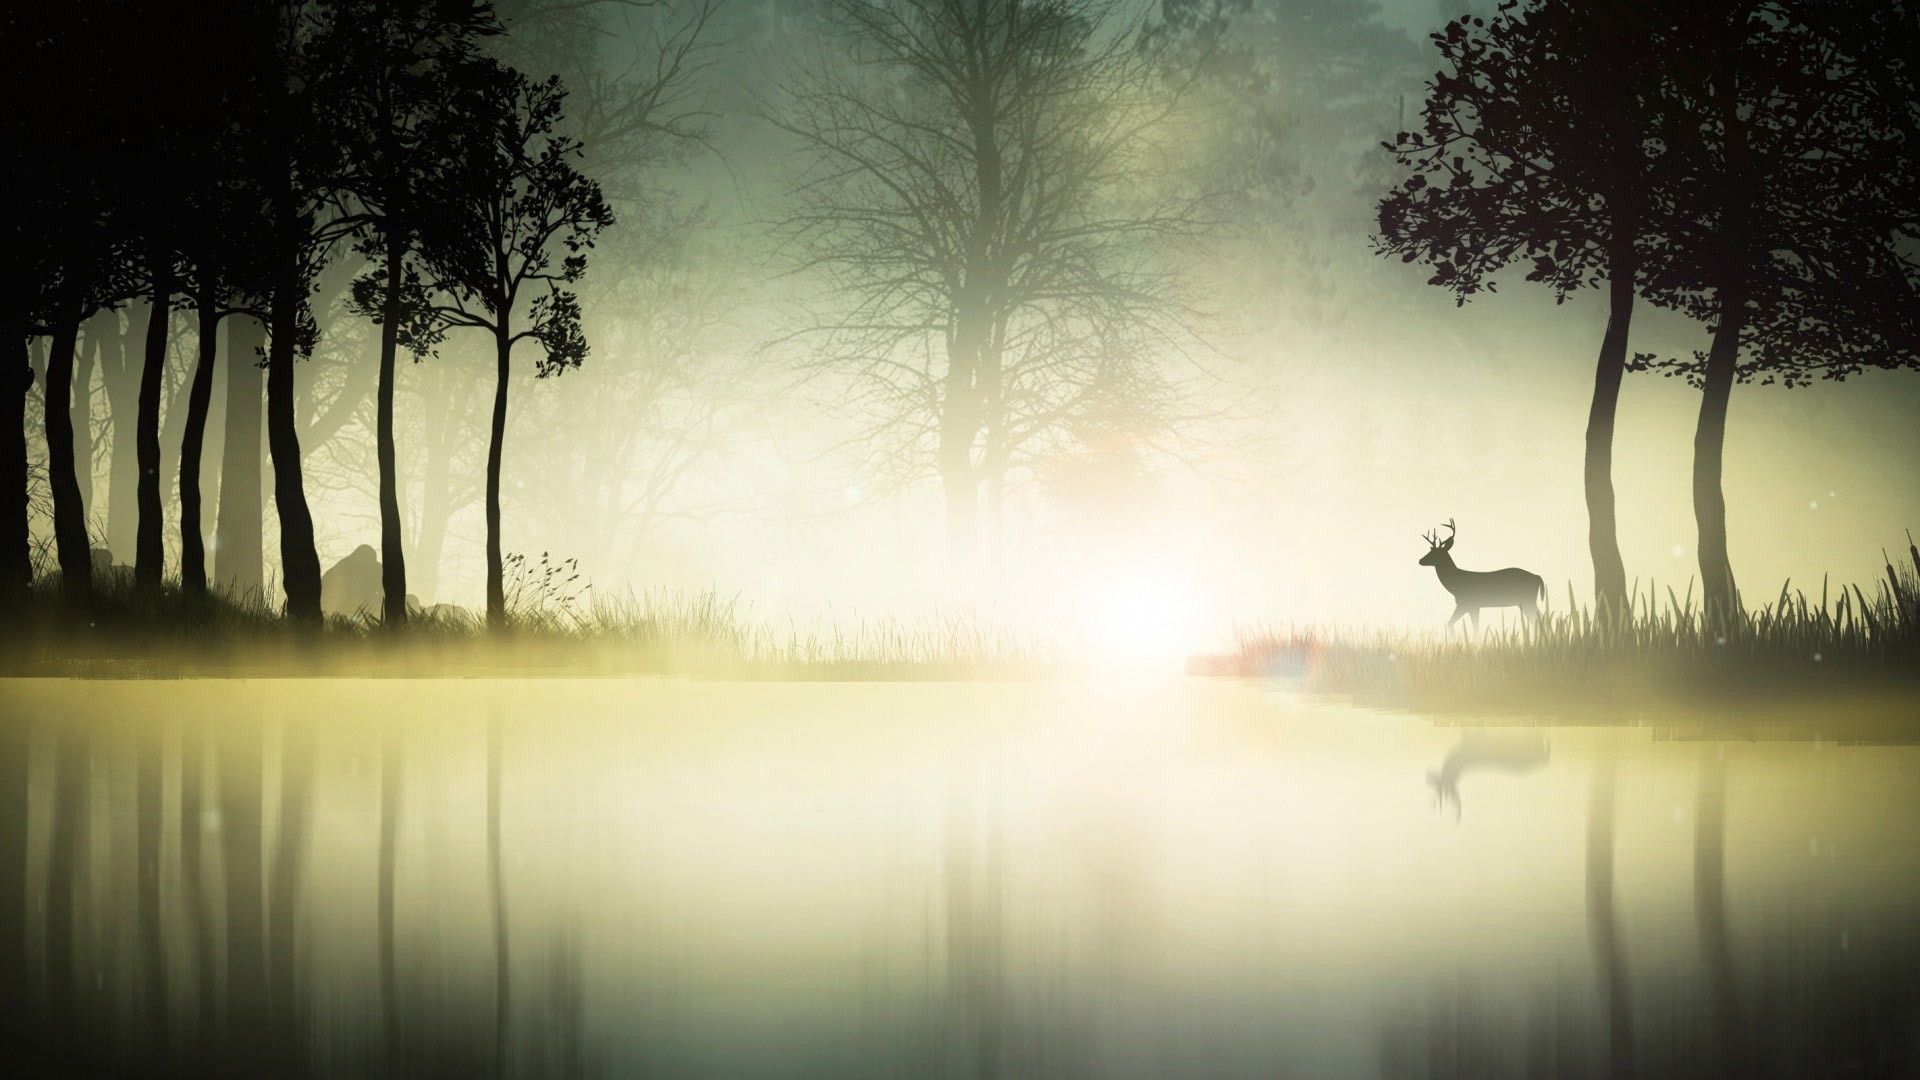 digital Art, Fantasy Art, Animals, Deer, Nature, Landscape, Trees